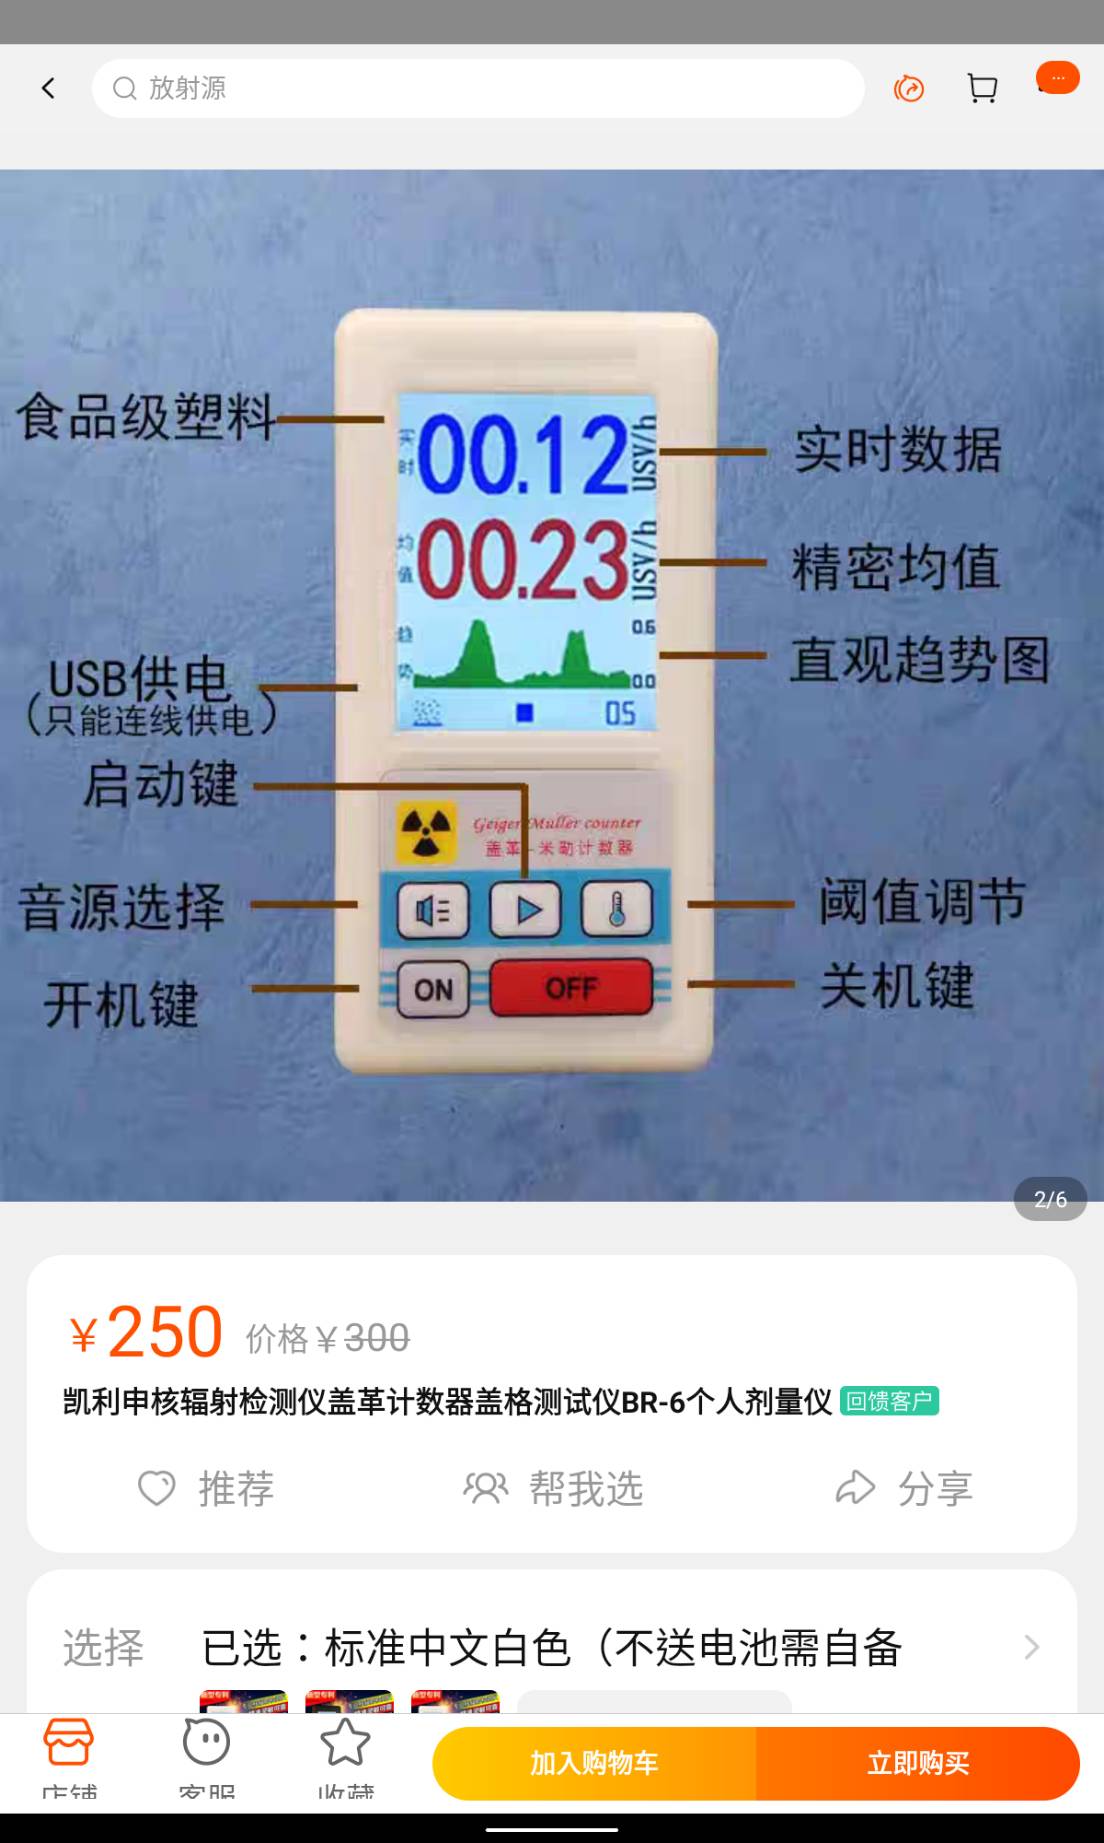 Uploaded_via_HKEPC_IR_Pro_Android(99109).jpg